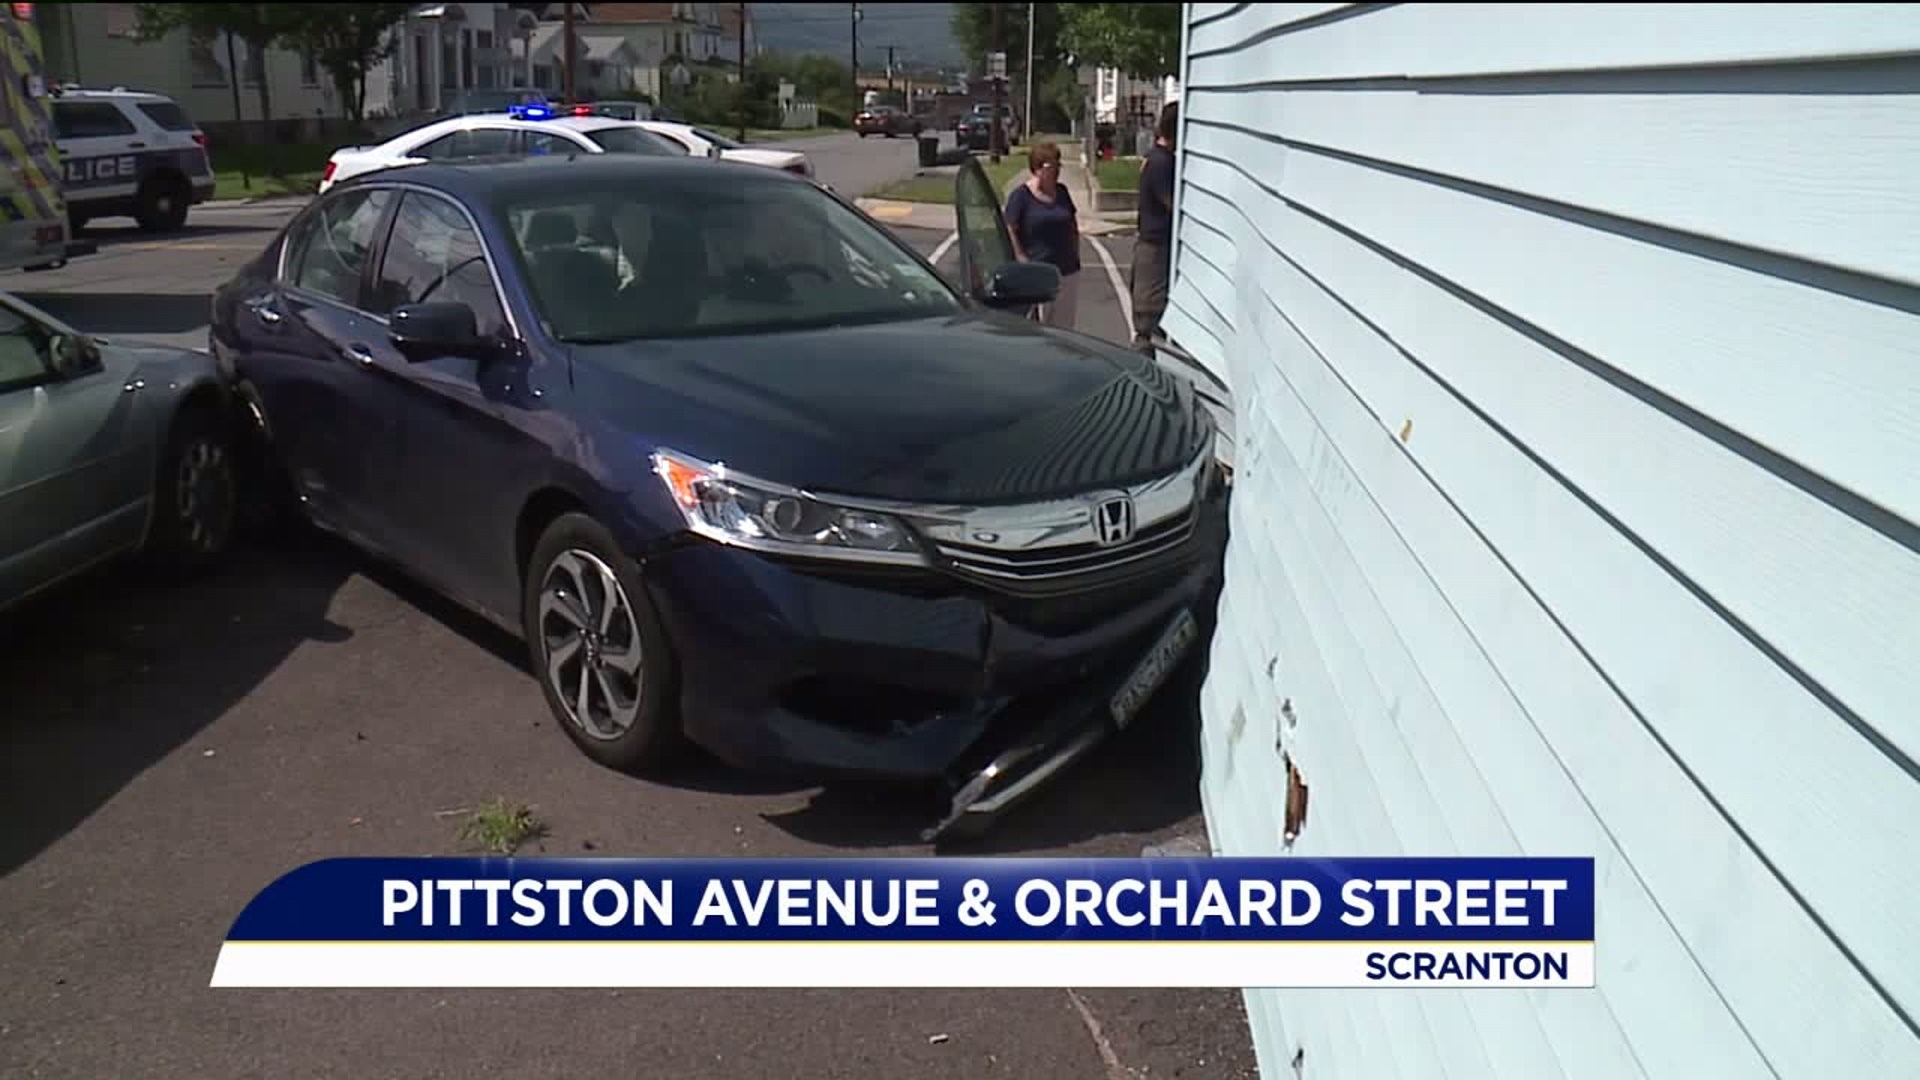 Three Car Crash Under Investigation in Scranton